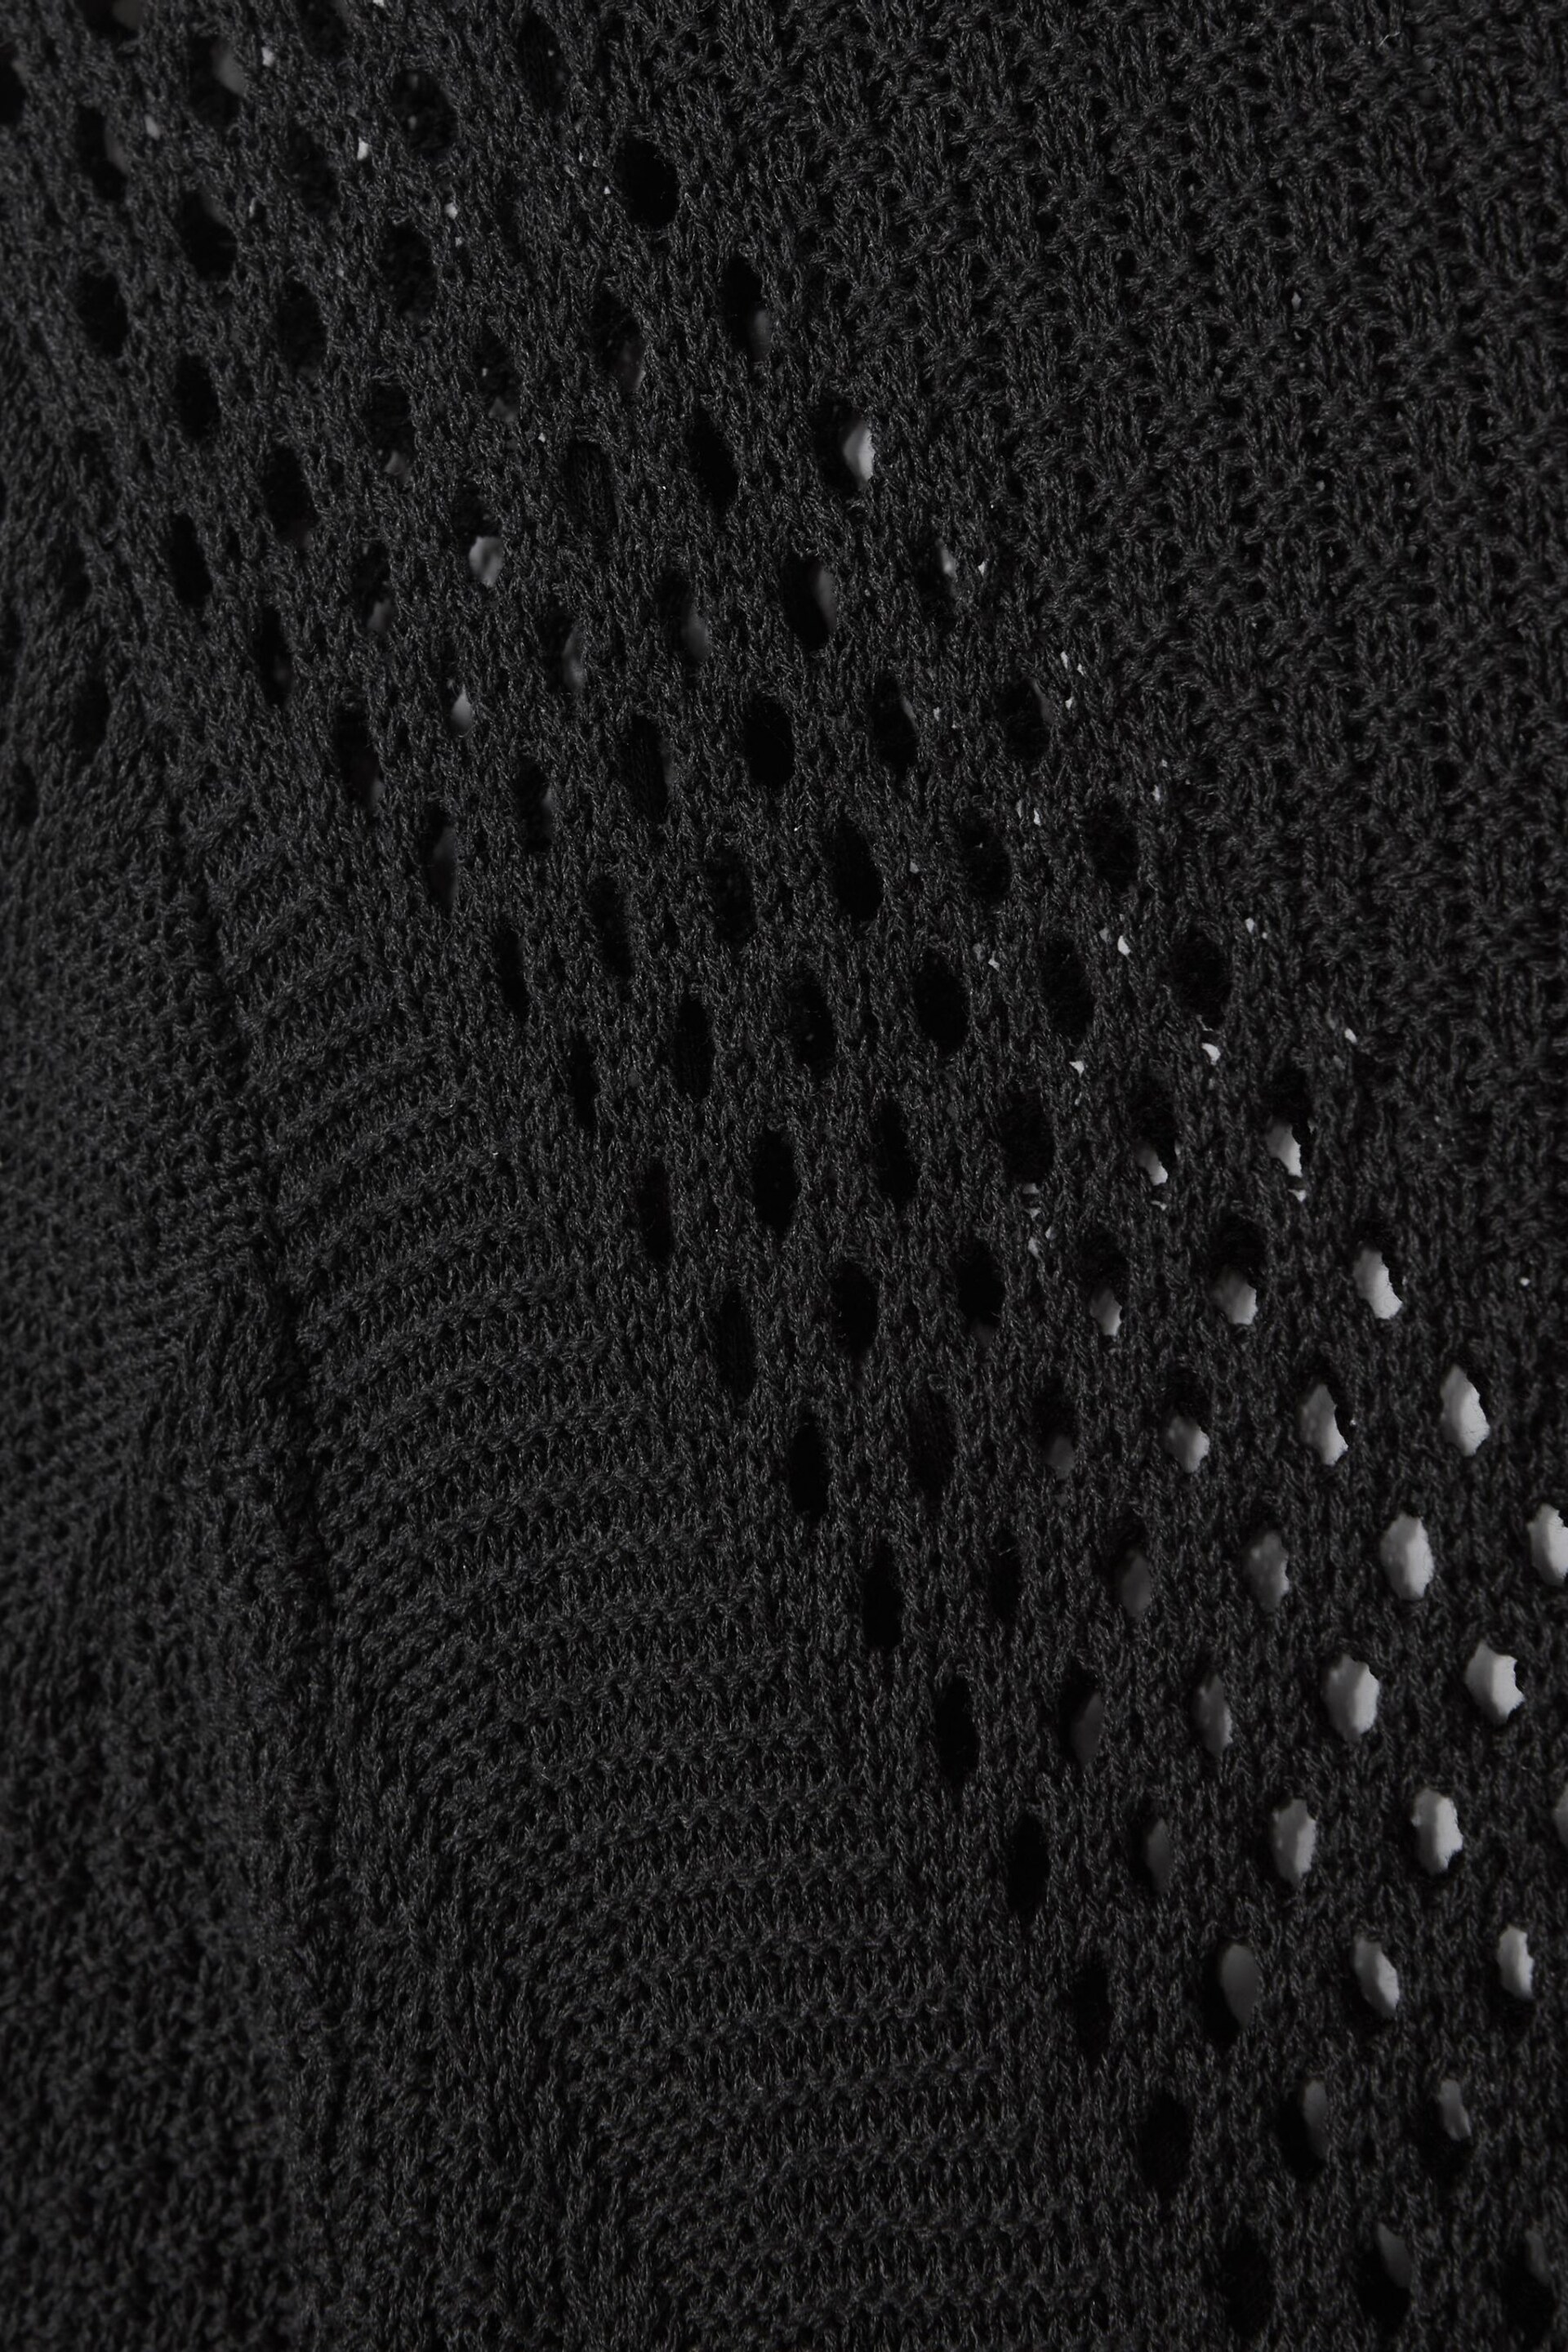 Florere Crochet Midi Dress - Image 6 of 6